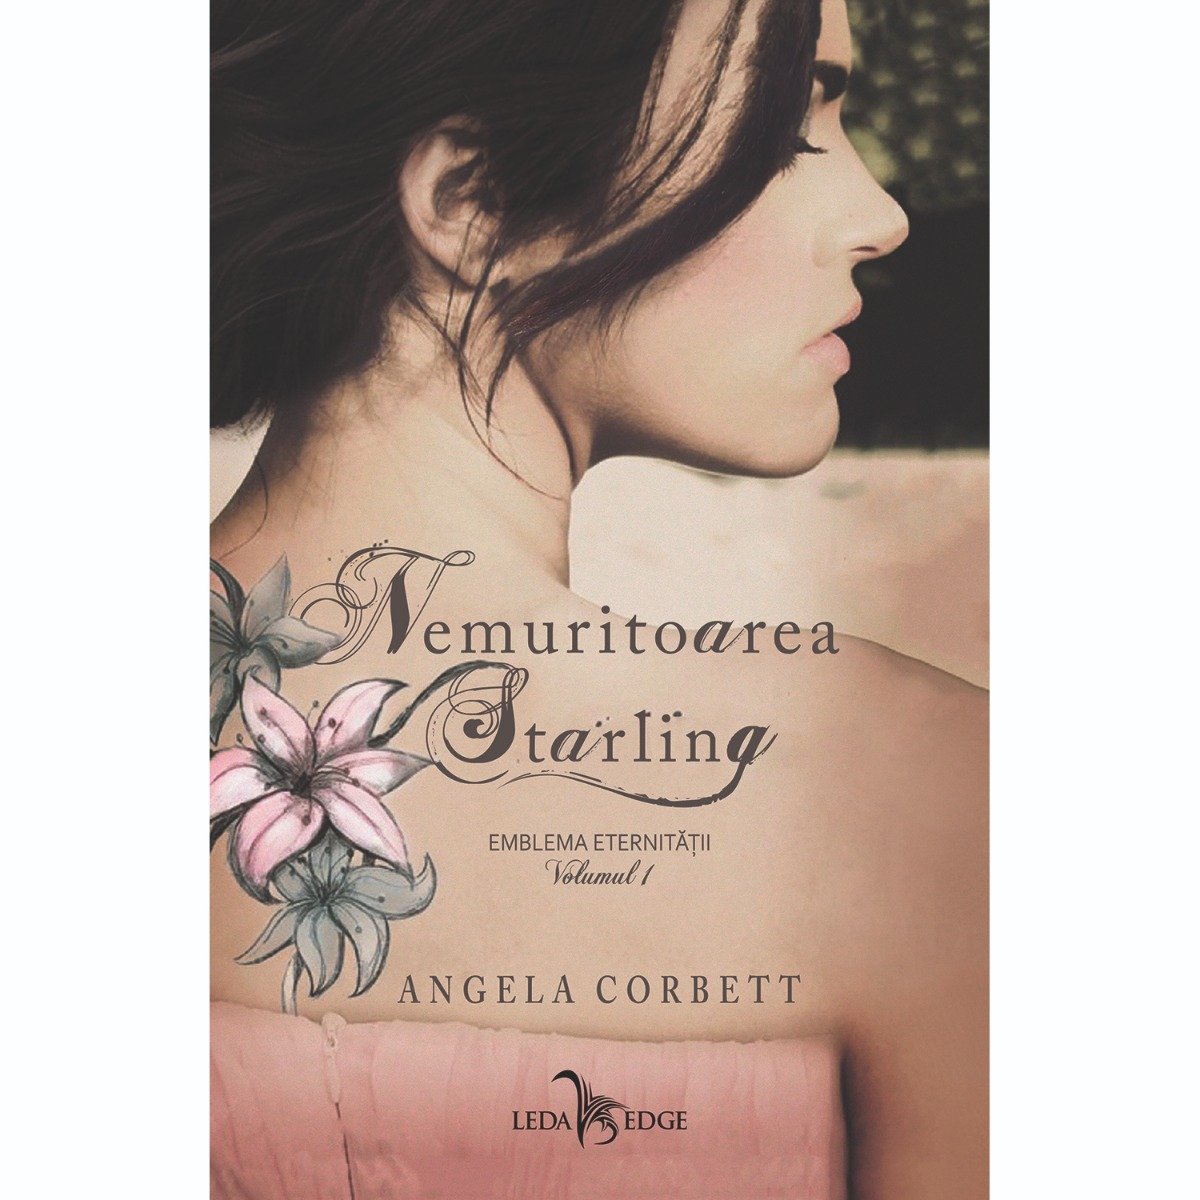 Poze Carte Editura Corint, Nemuritoarea Starling vol.1 Emblema eternitatii, Angela Corbett